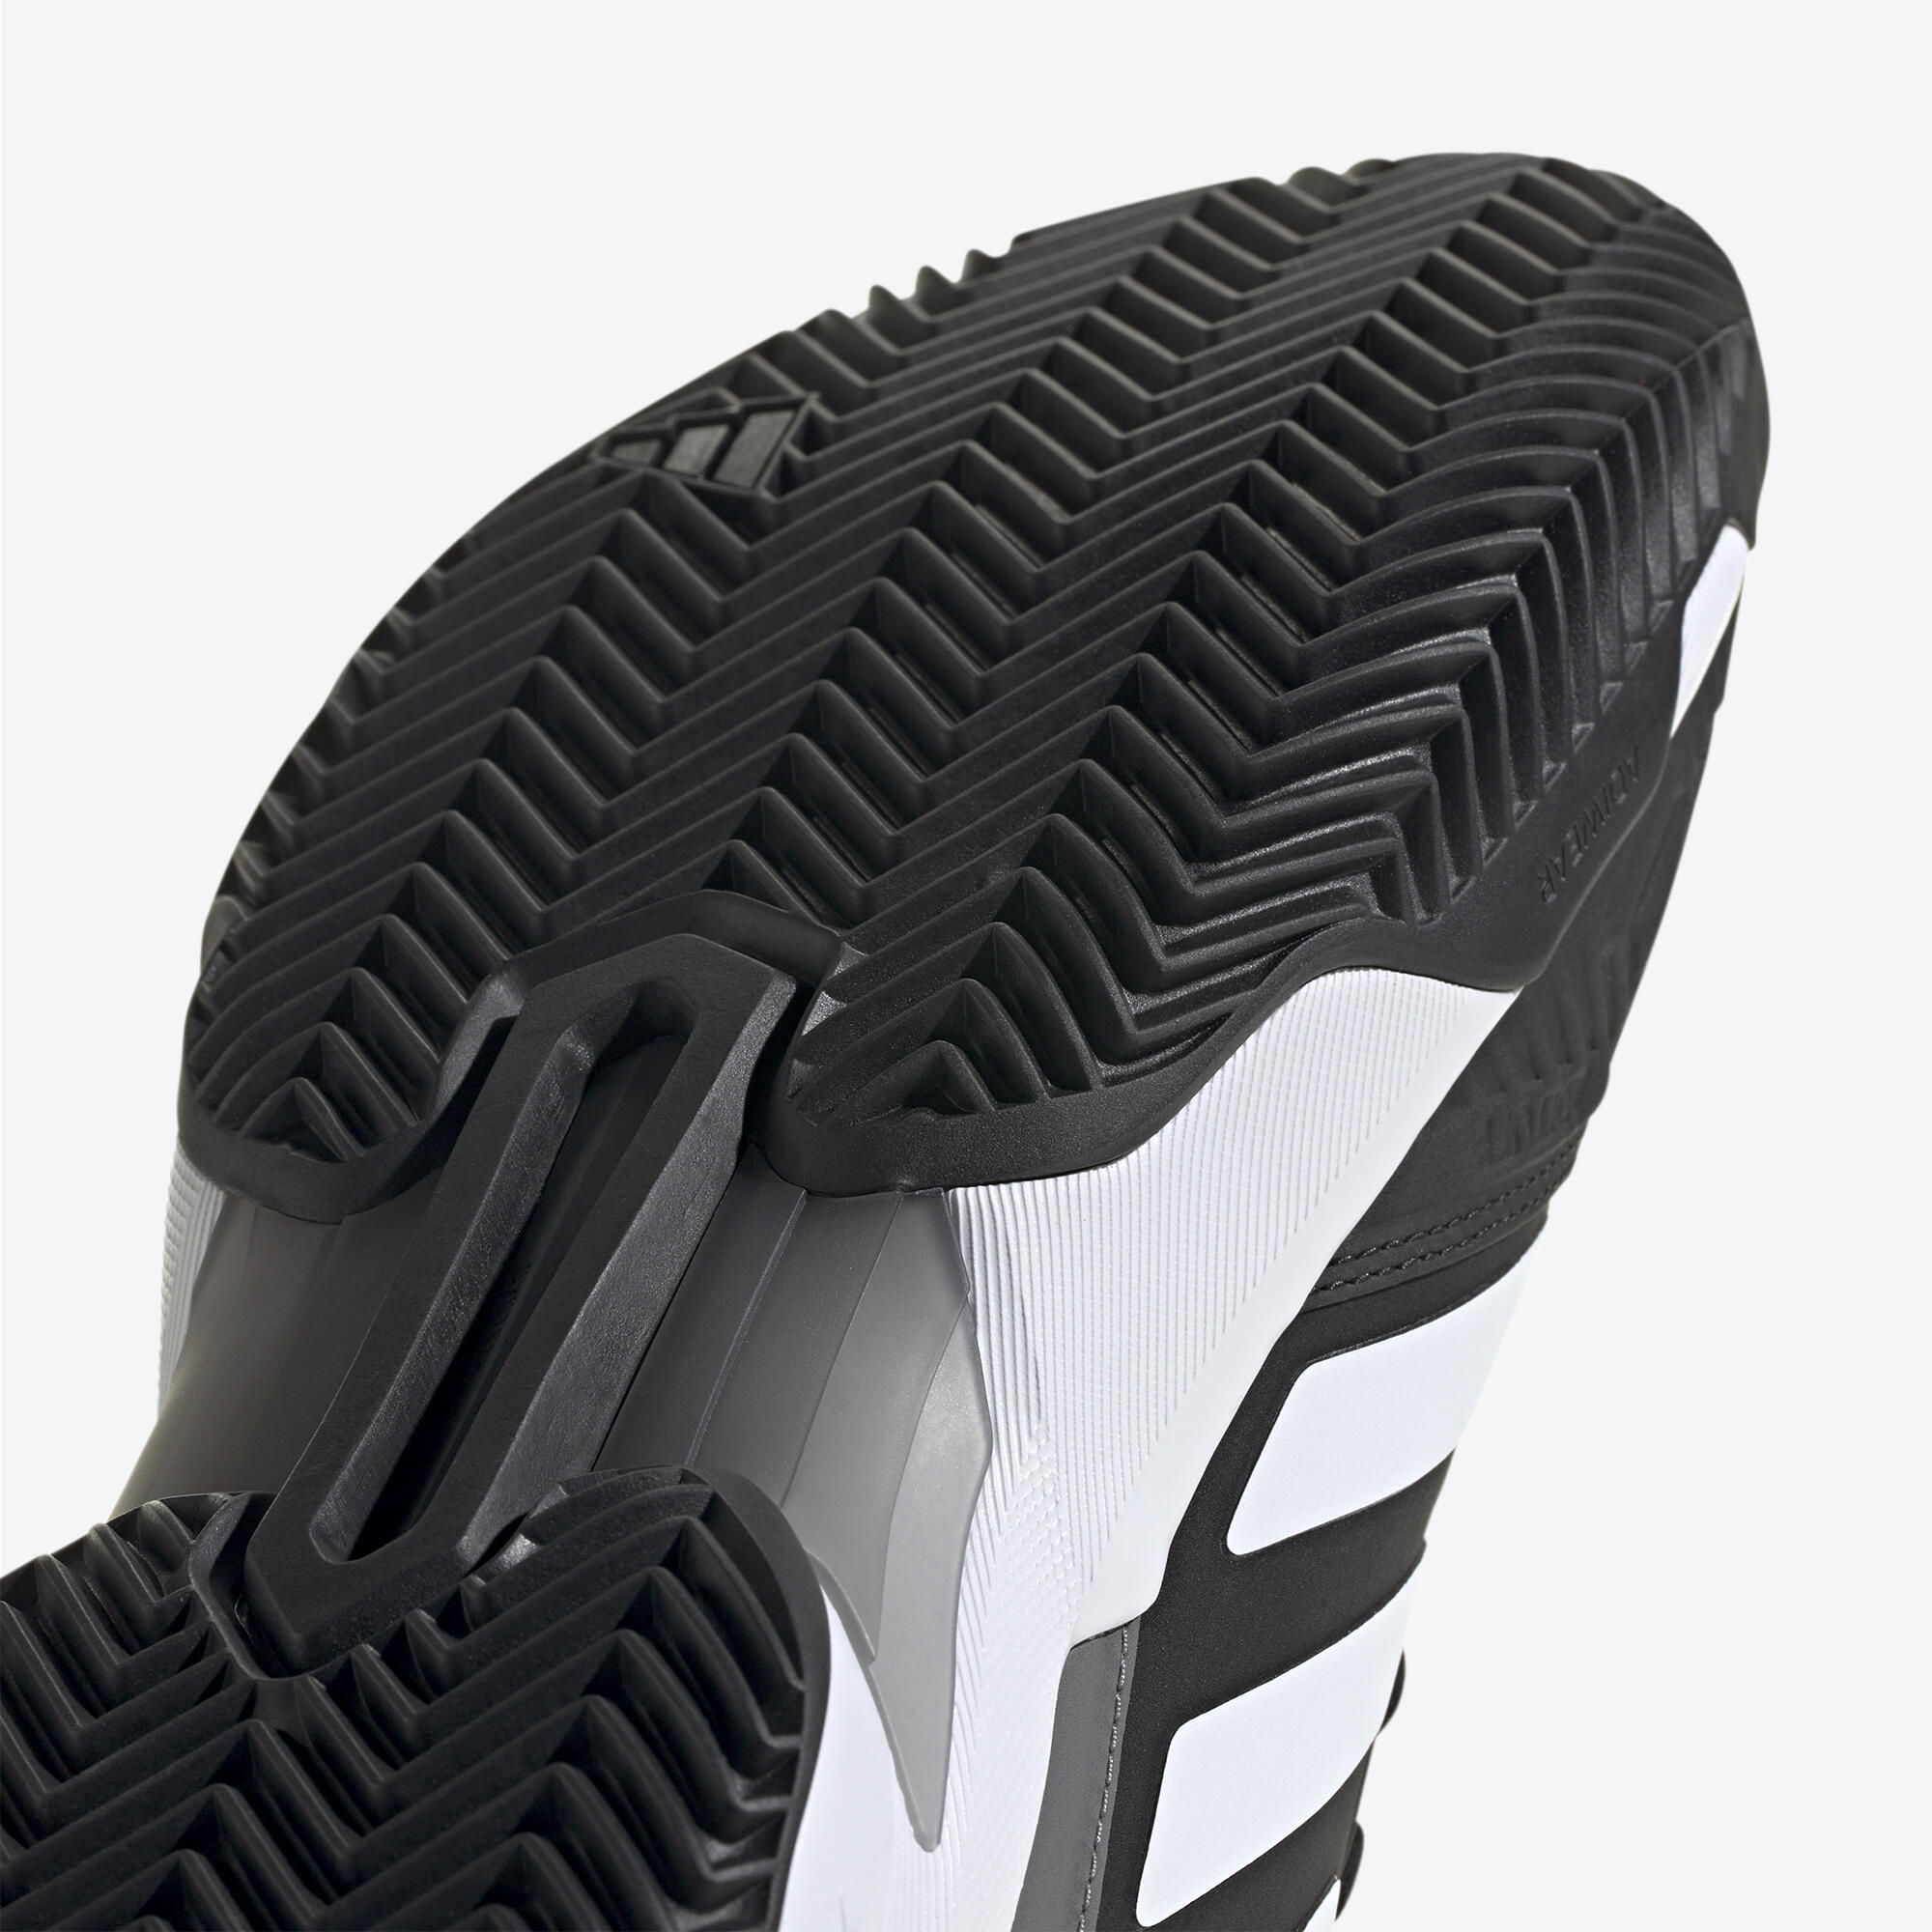 Men's Clay Court Tennis Shoes CourtJam Control - Black/White 4/7